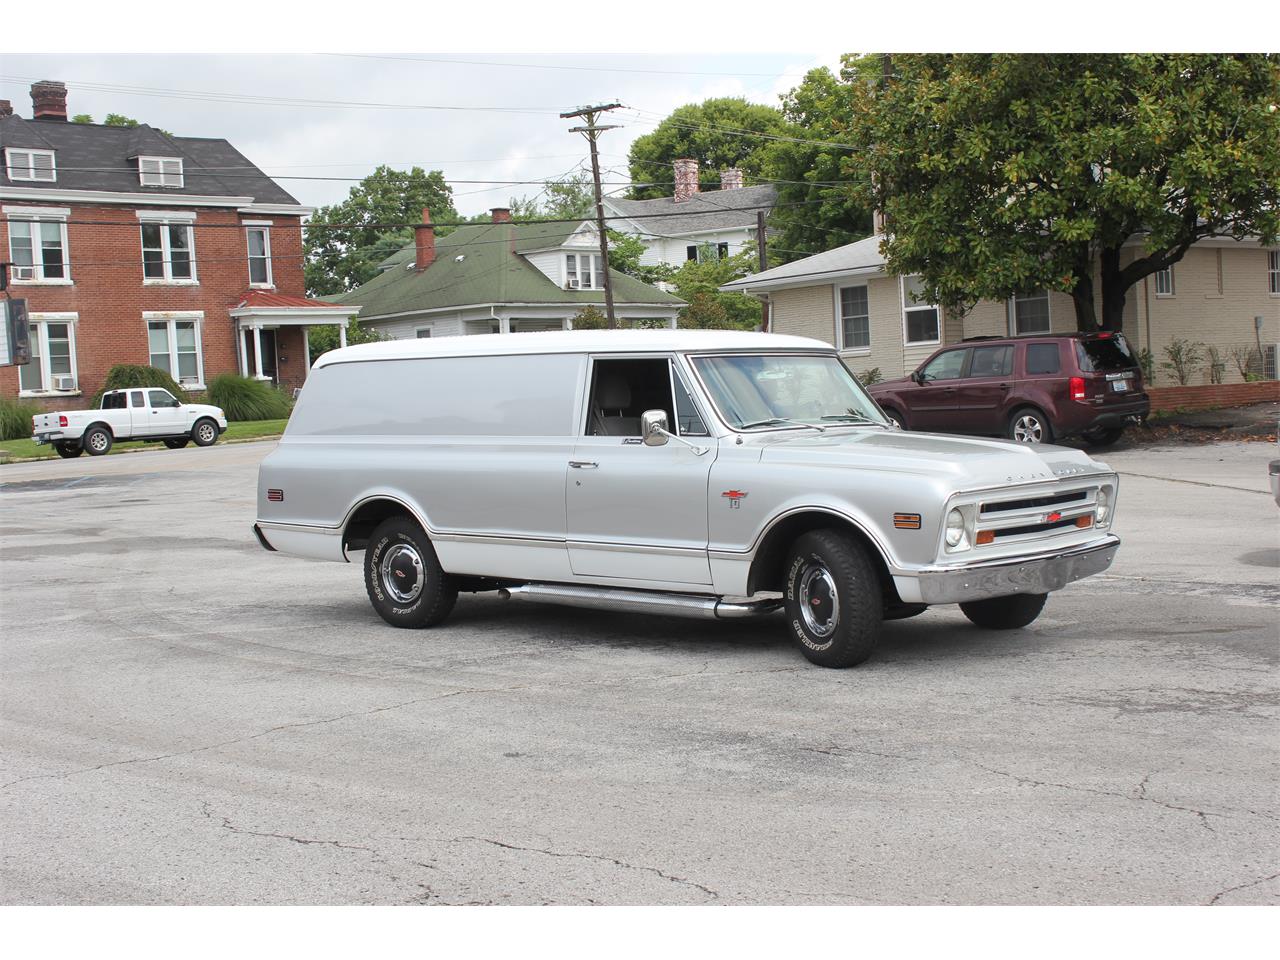 1968 Chevrolet Panel Truck for Sale | 0 | CC-1138398